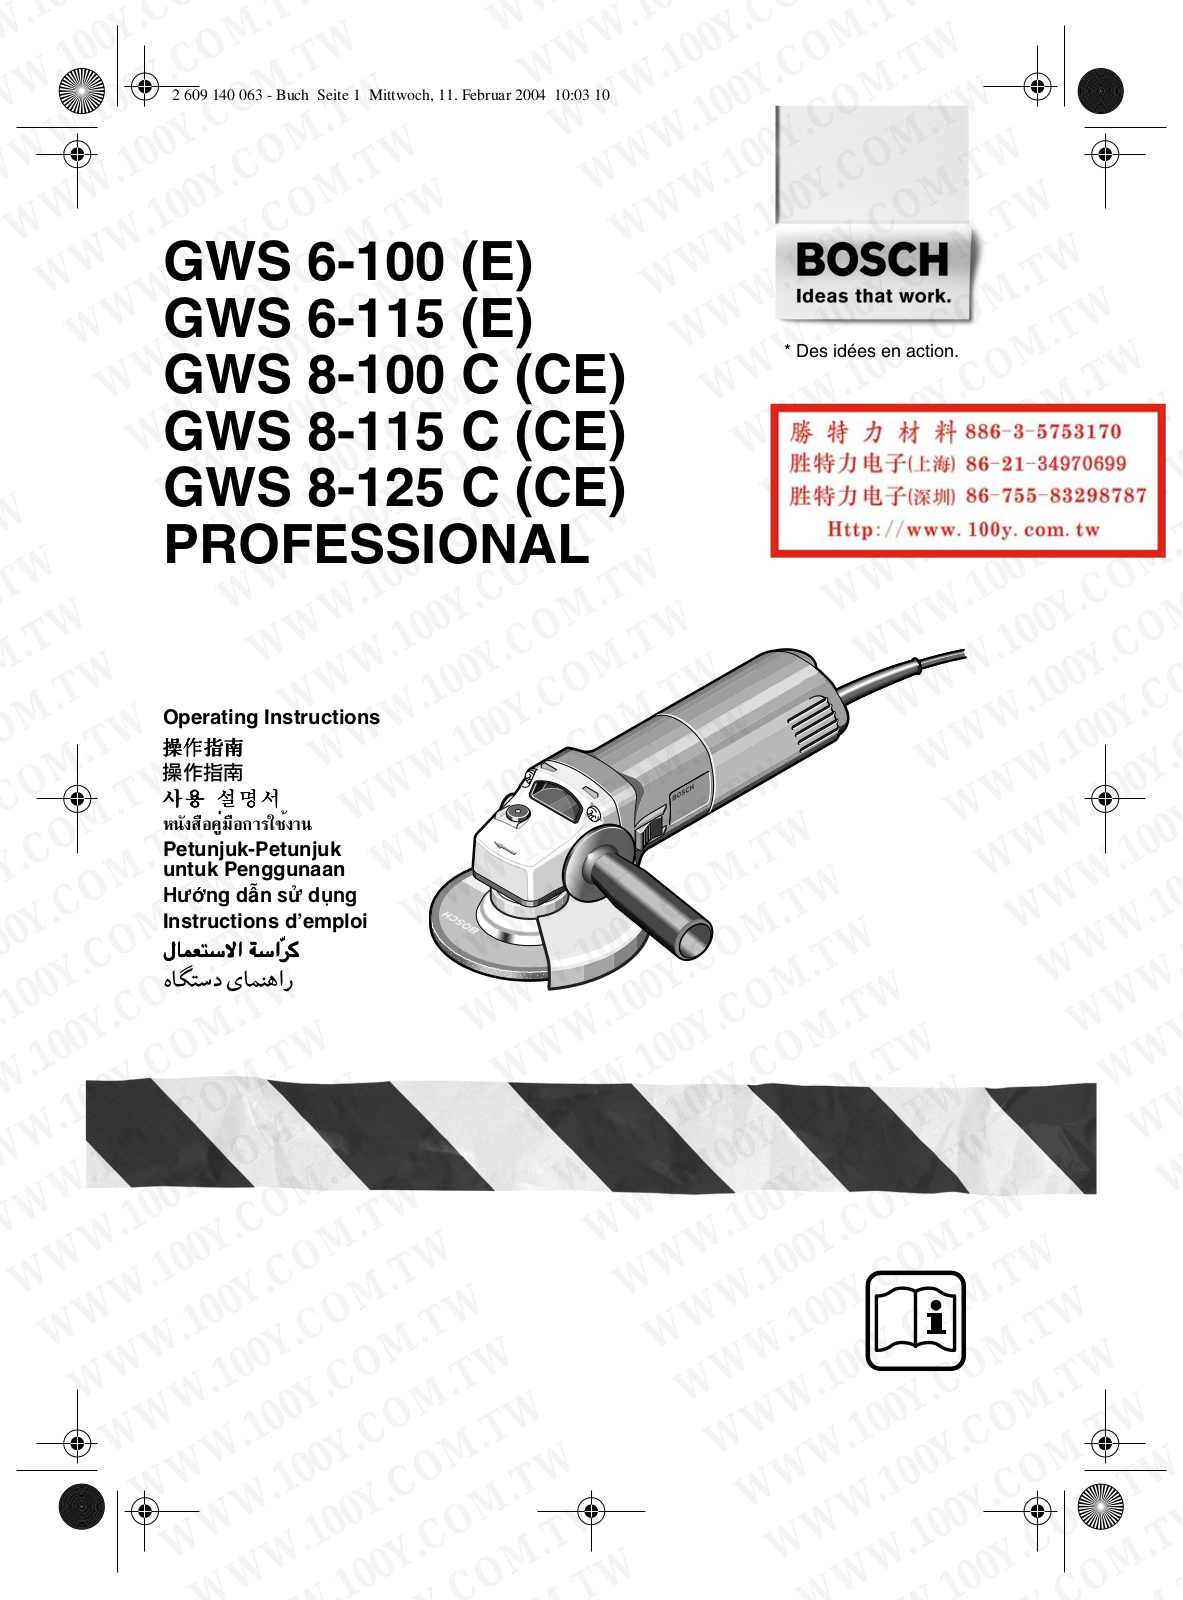 Bosch GWS 6-100E PROFESSIONAL, GWS 6-115E PROFESSIONAL, GWS 6-100 PROFESSIONAL, GWS 8-100C PROFESSIONAL, GWS 6-115 PROFESSIONAL Operating Instructions Manual